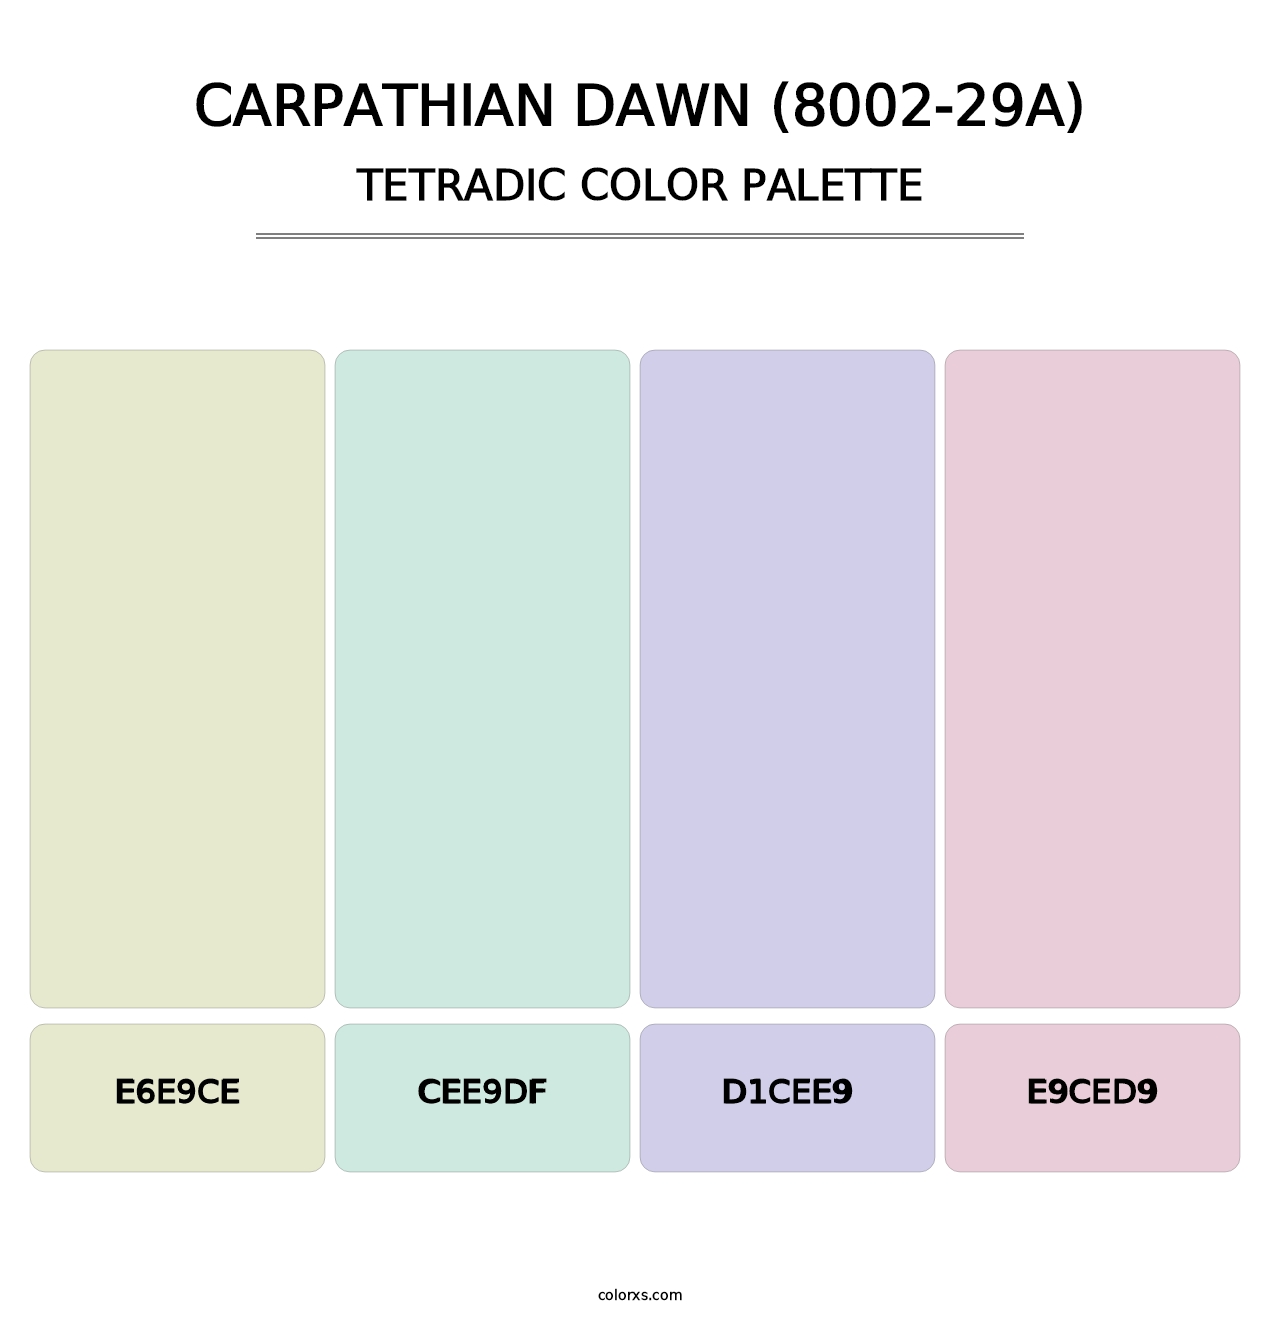 Carpathian Dawn (8002-29A) - Tetradic Color Palette